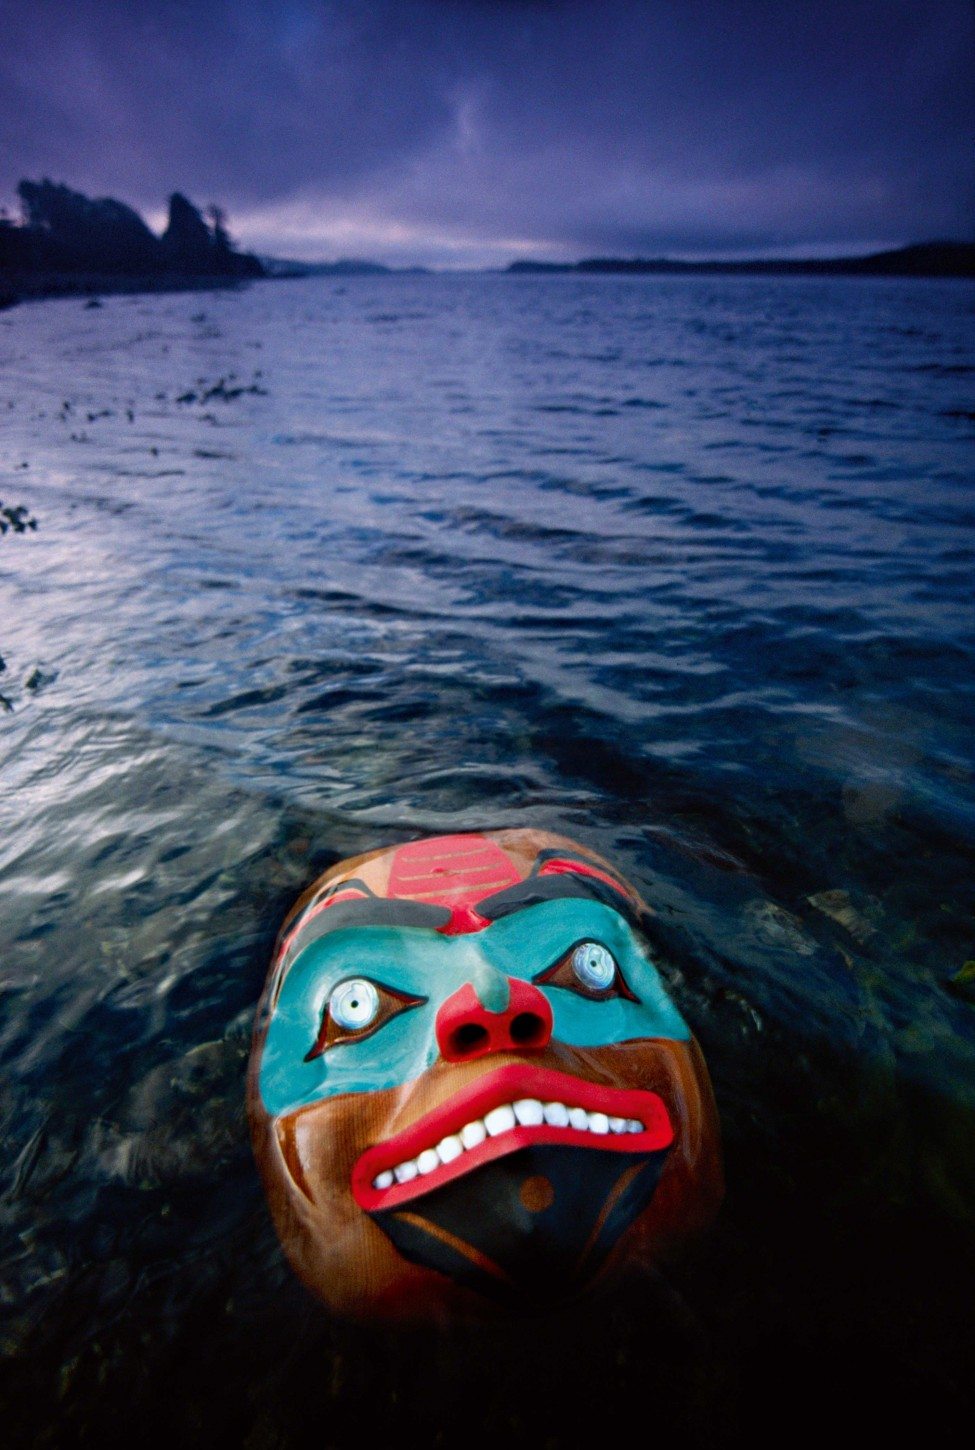 Shark mask by Haida artist Reg Davidson, Queen Charlotte Island, British Columbia, Canada.<br />
Photo by Frans Lanting | National Geographic Creative